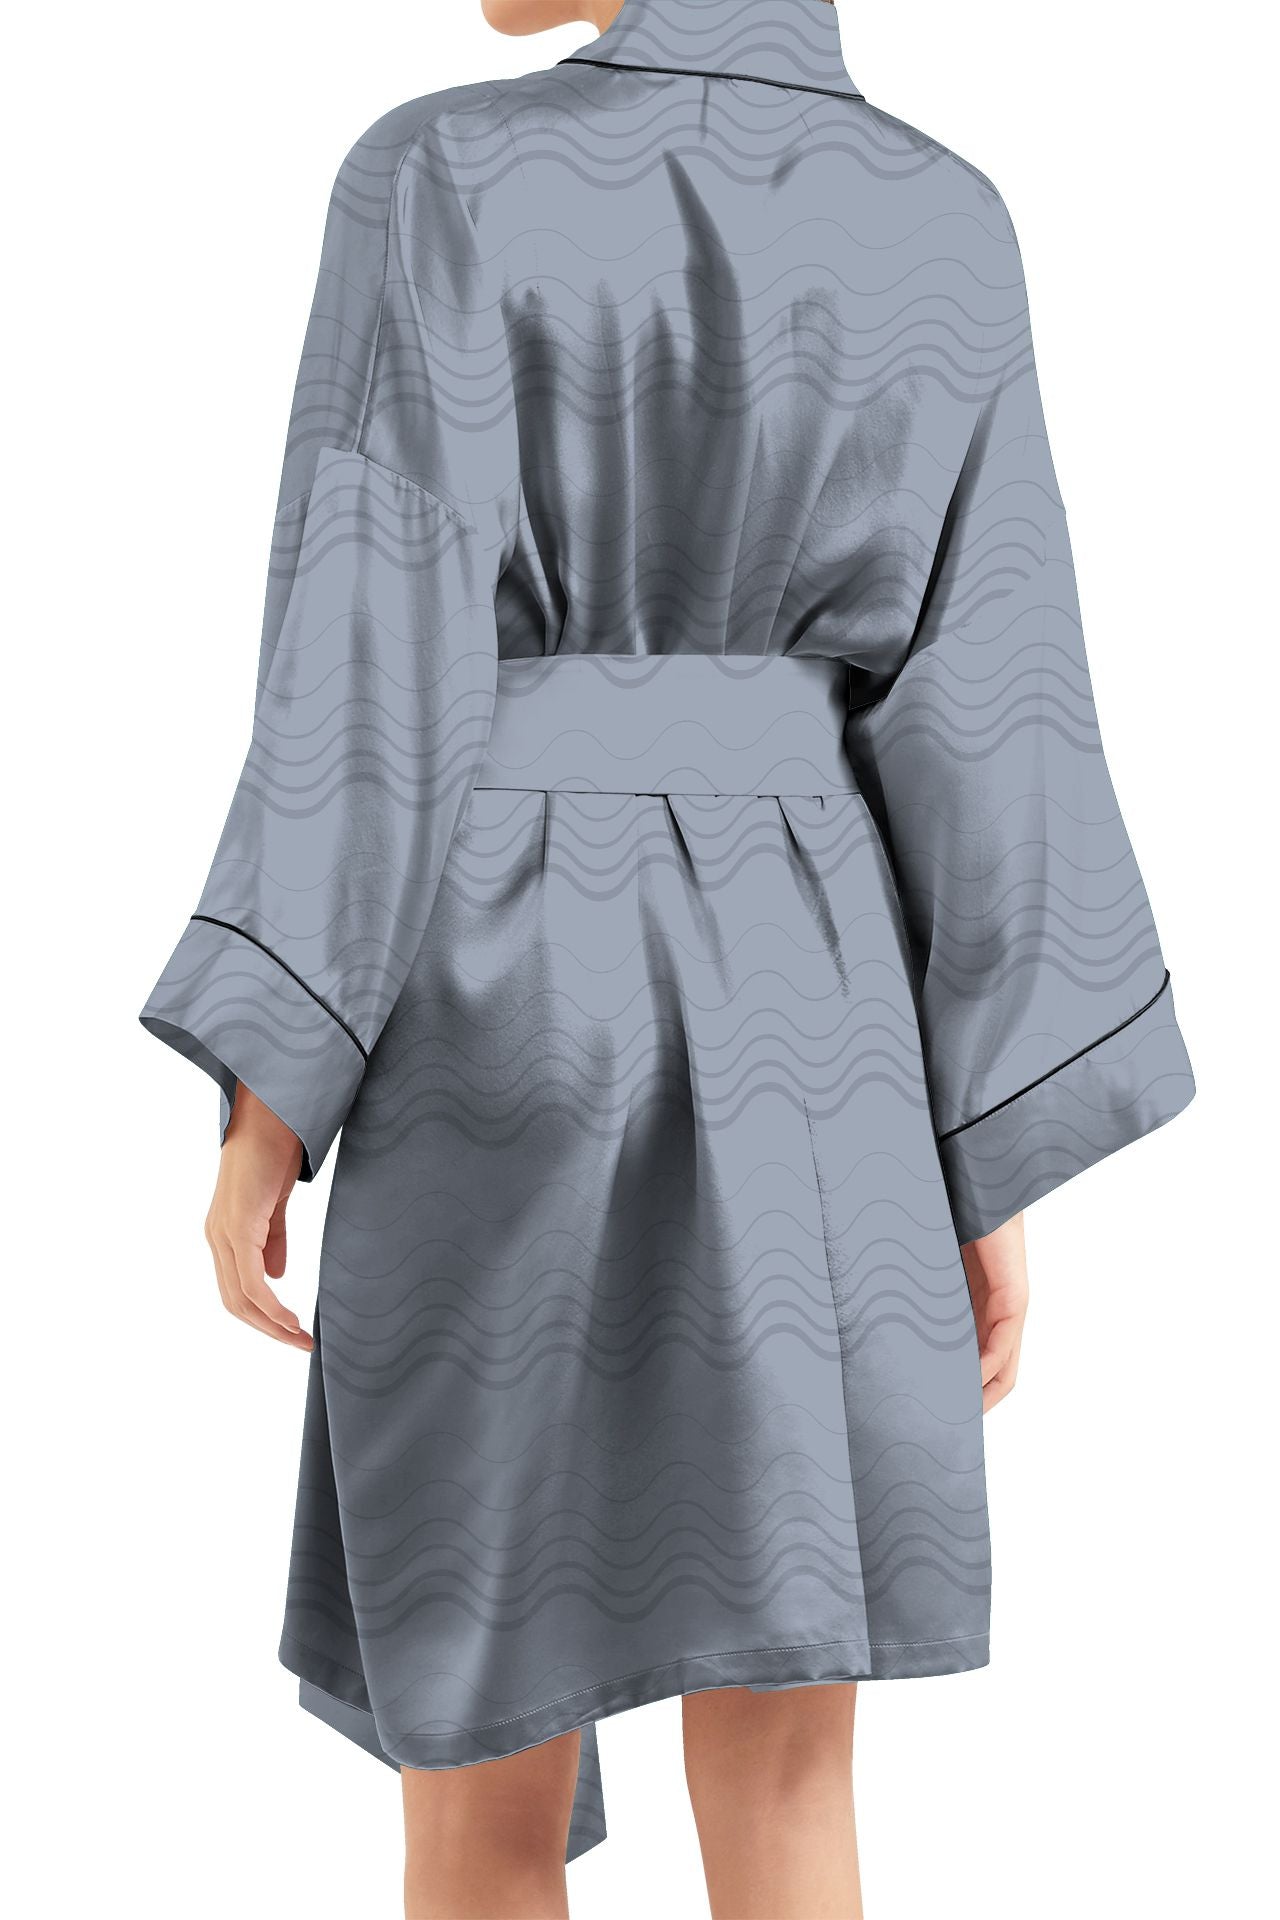 "Kyle X Shahida" "robes for women short" "kimono short dresses" "women's short kimono"